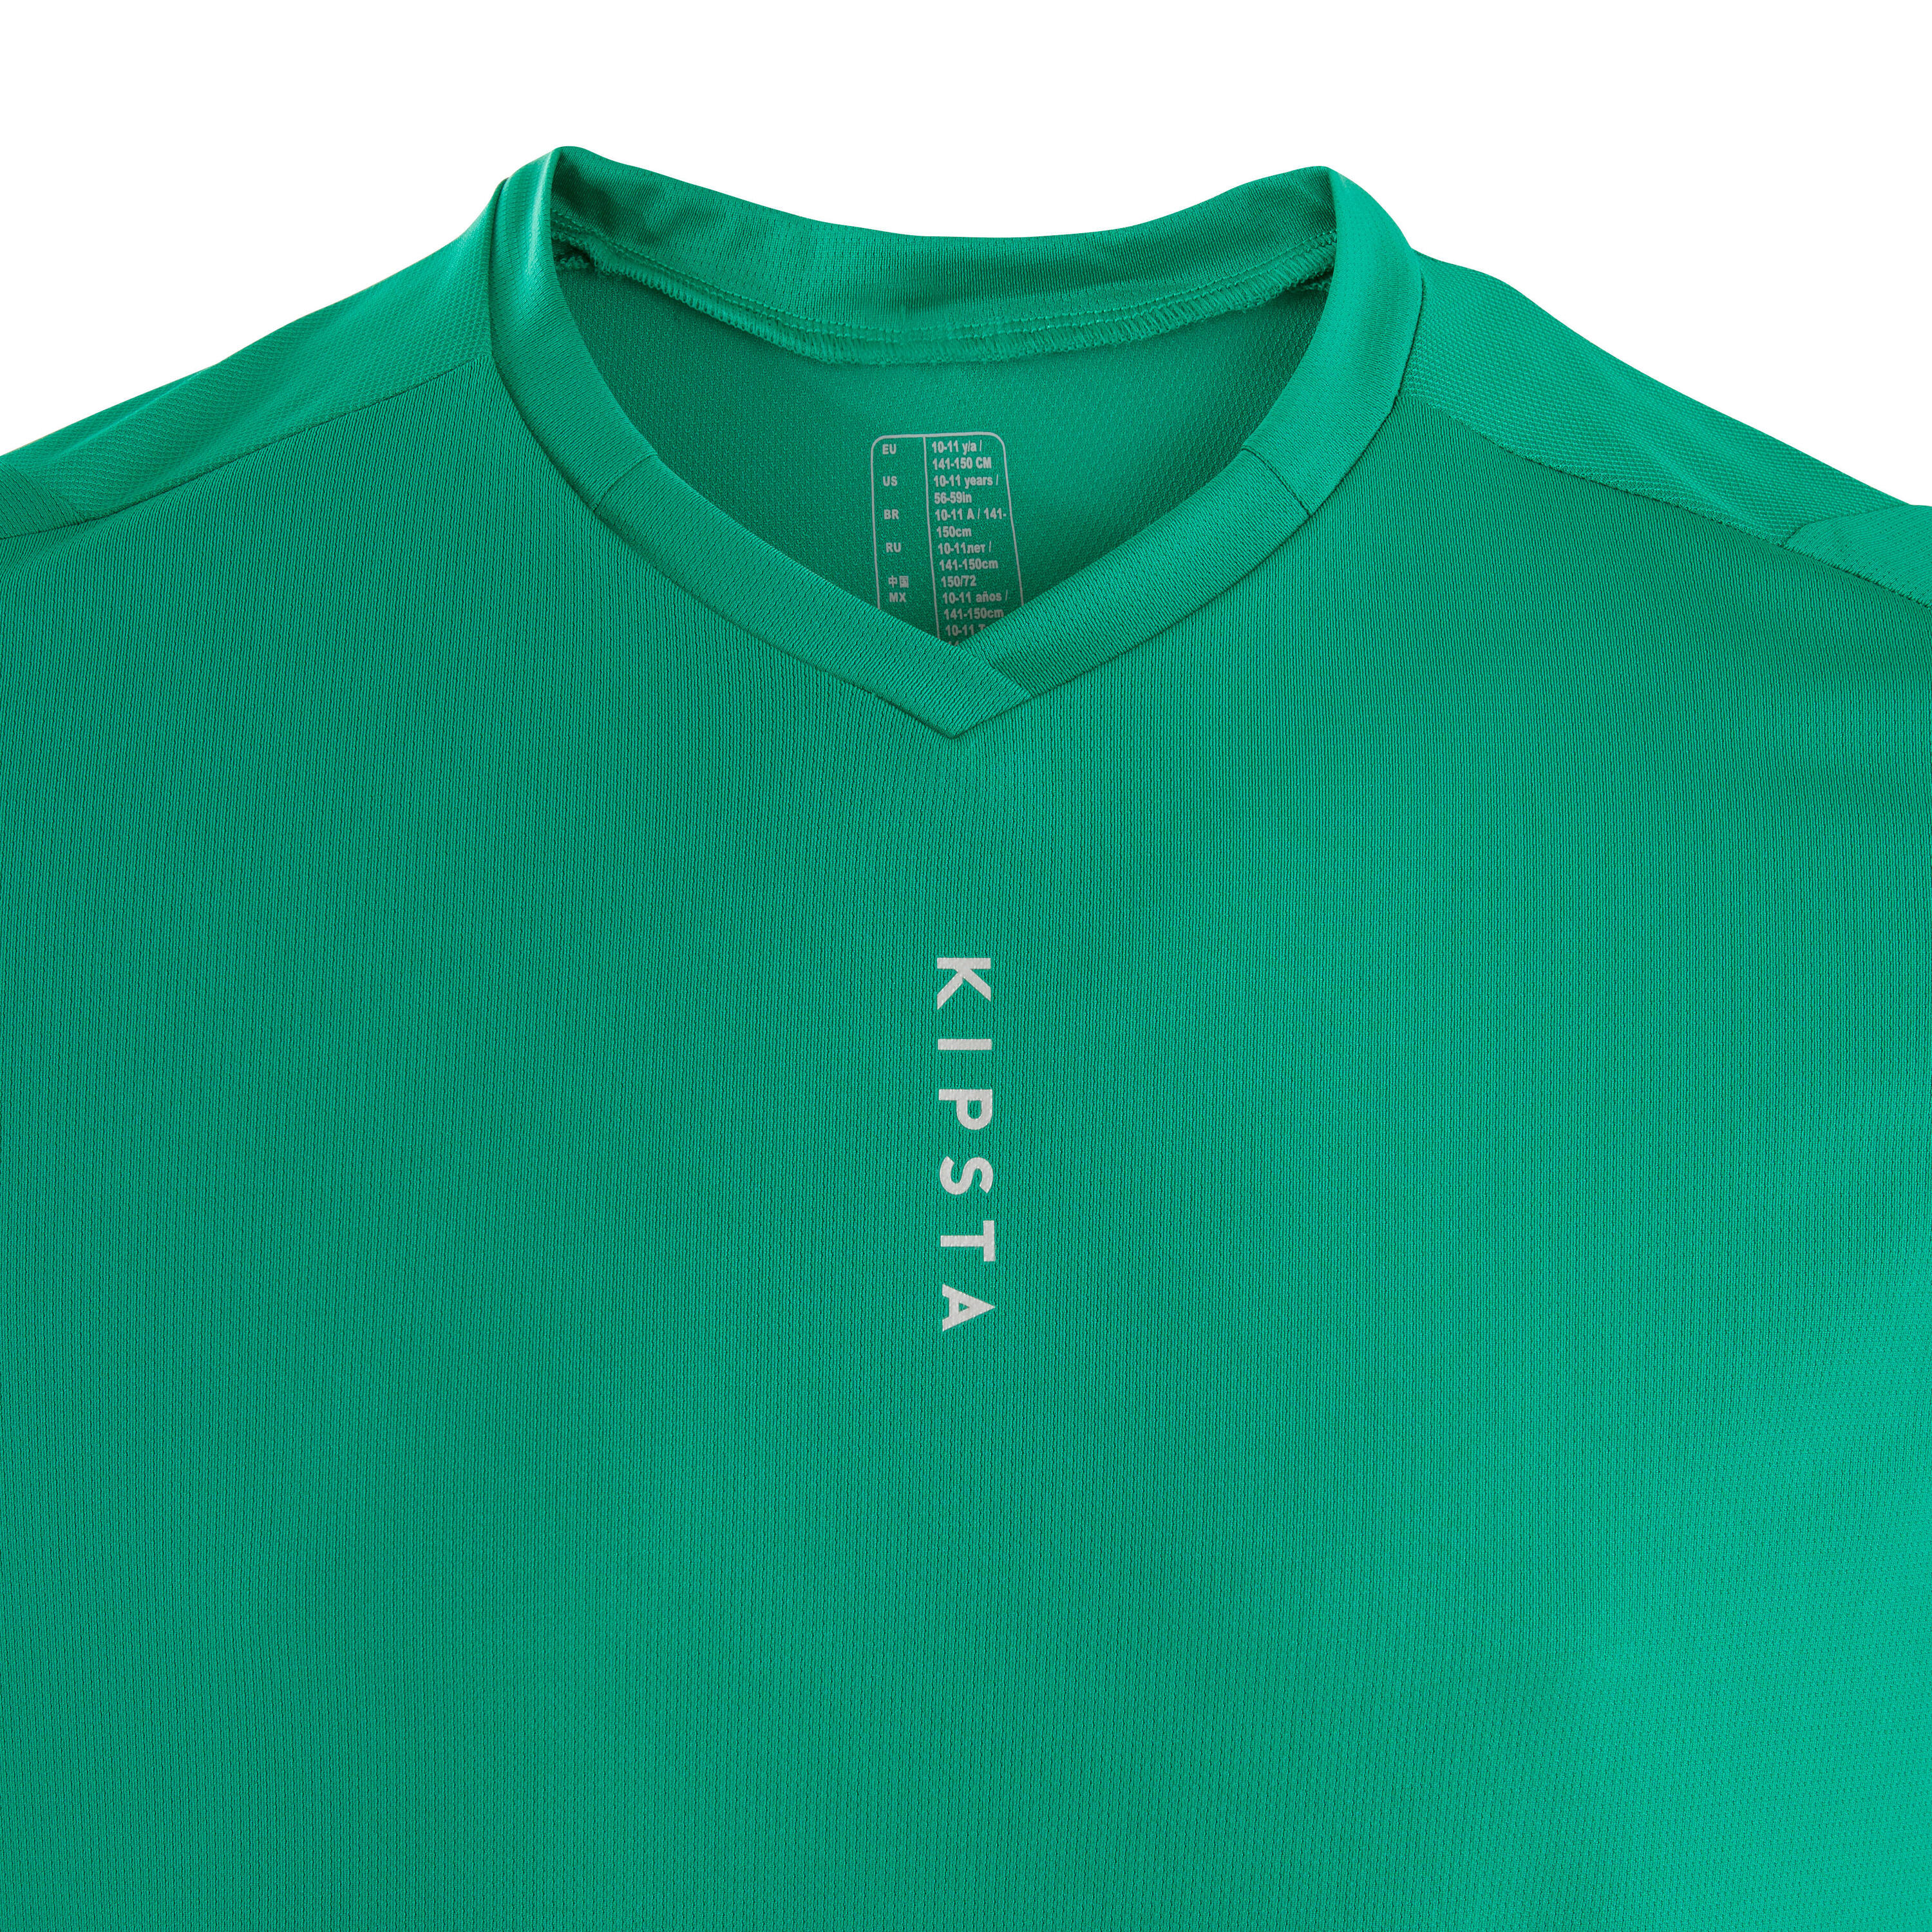 Adult Football Shirt F500 - Plain Green 4/4